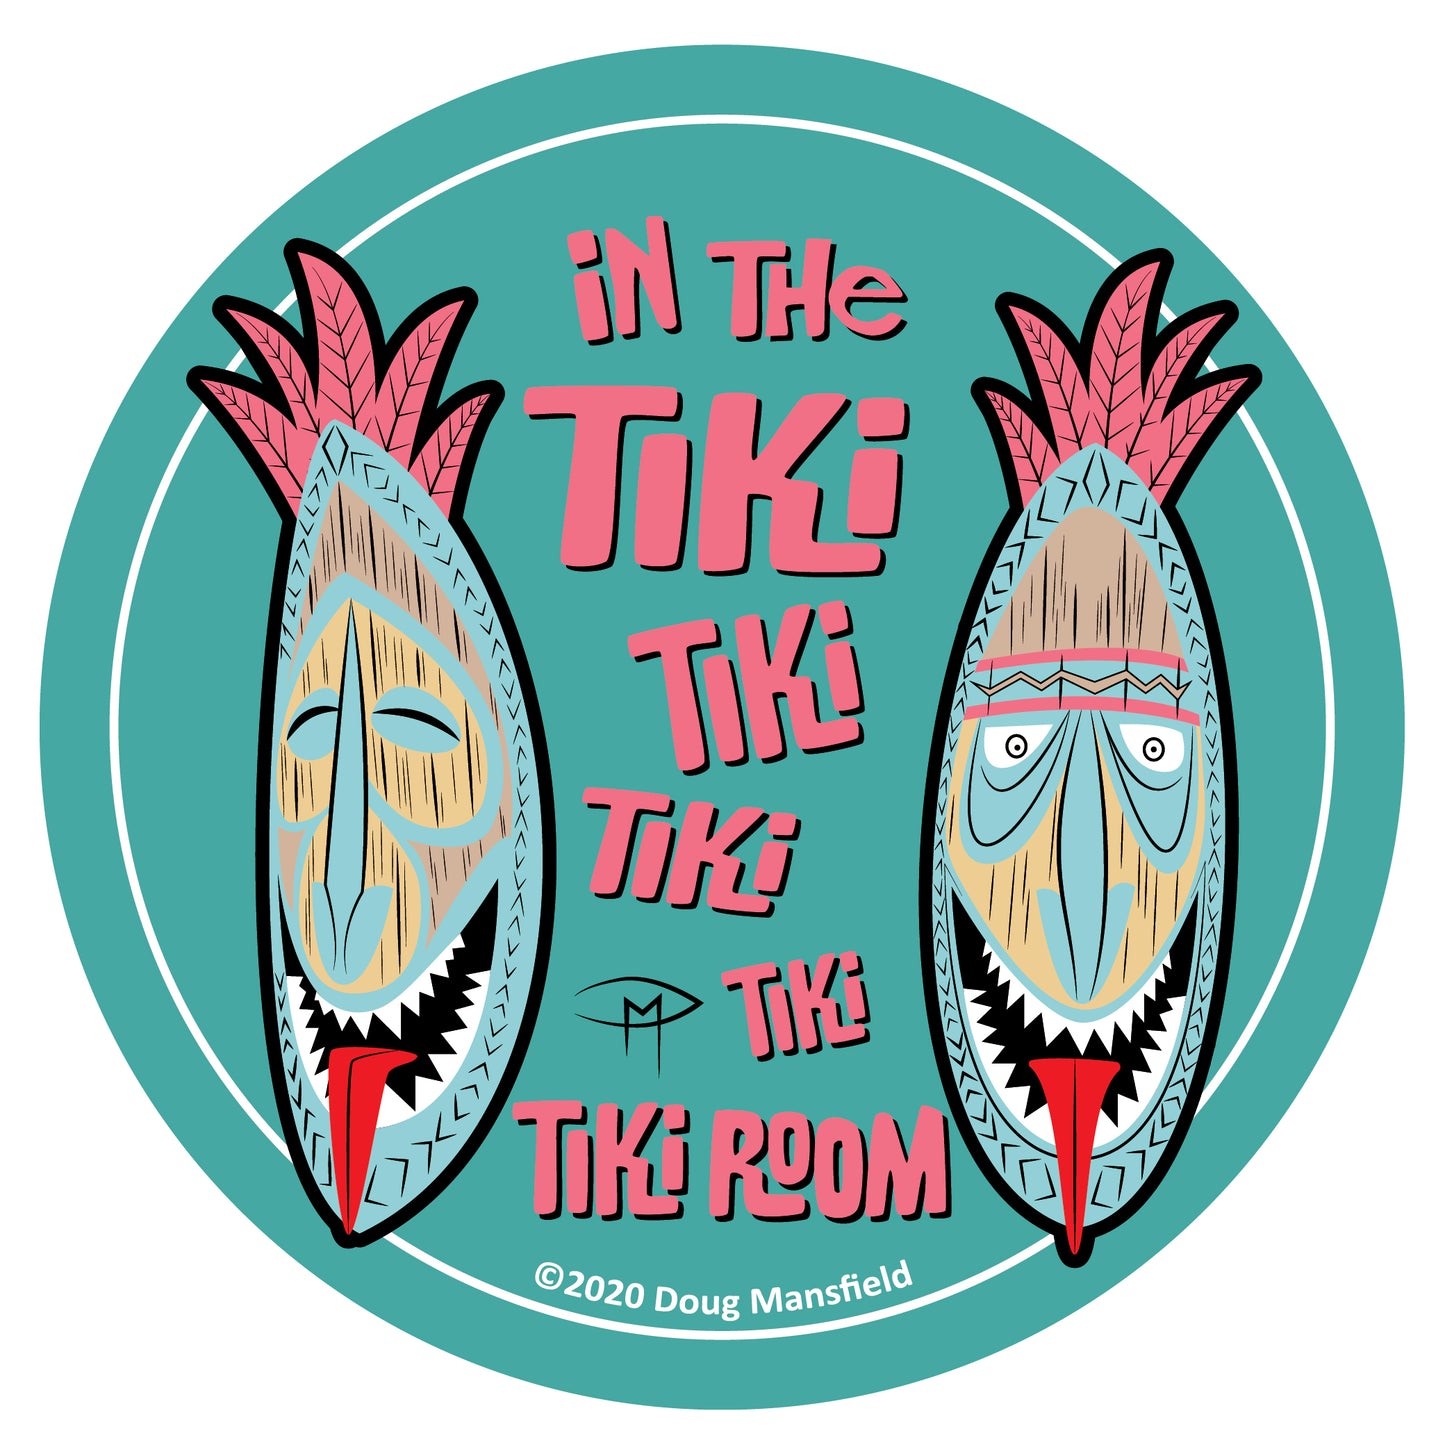 Tiki Room Coaster Set